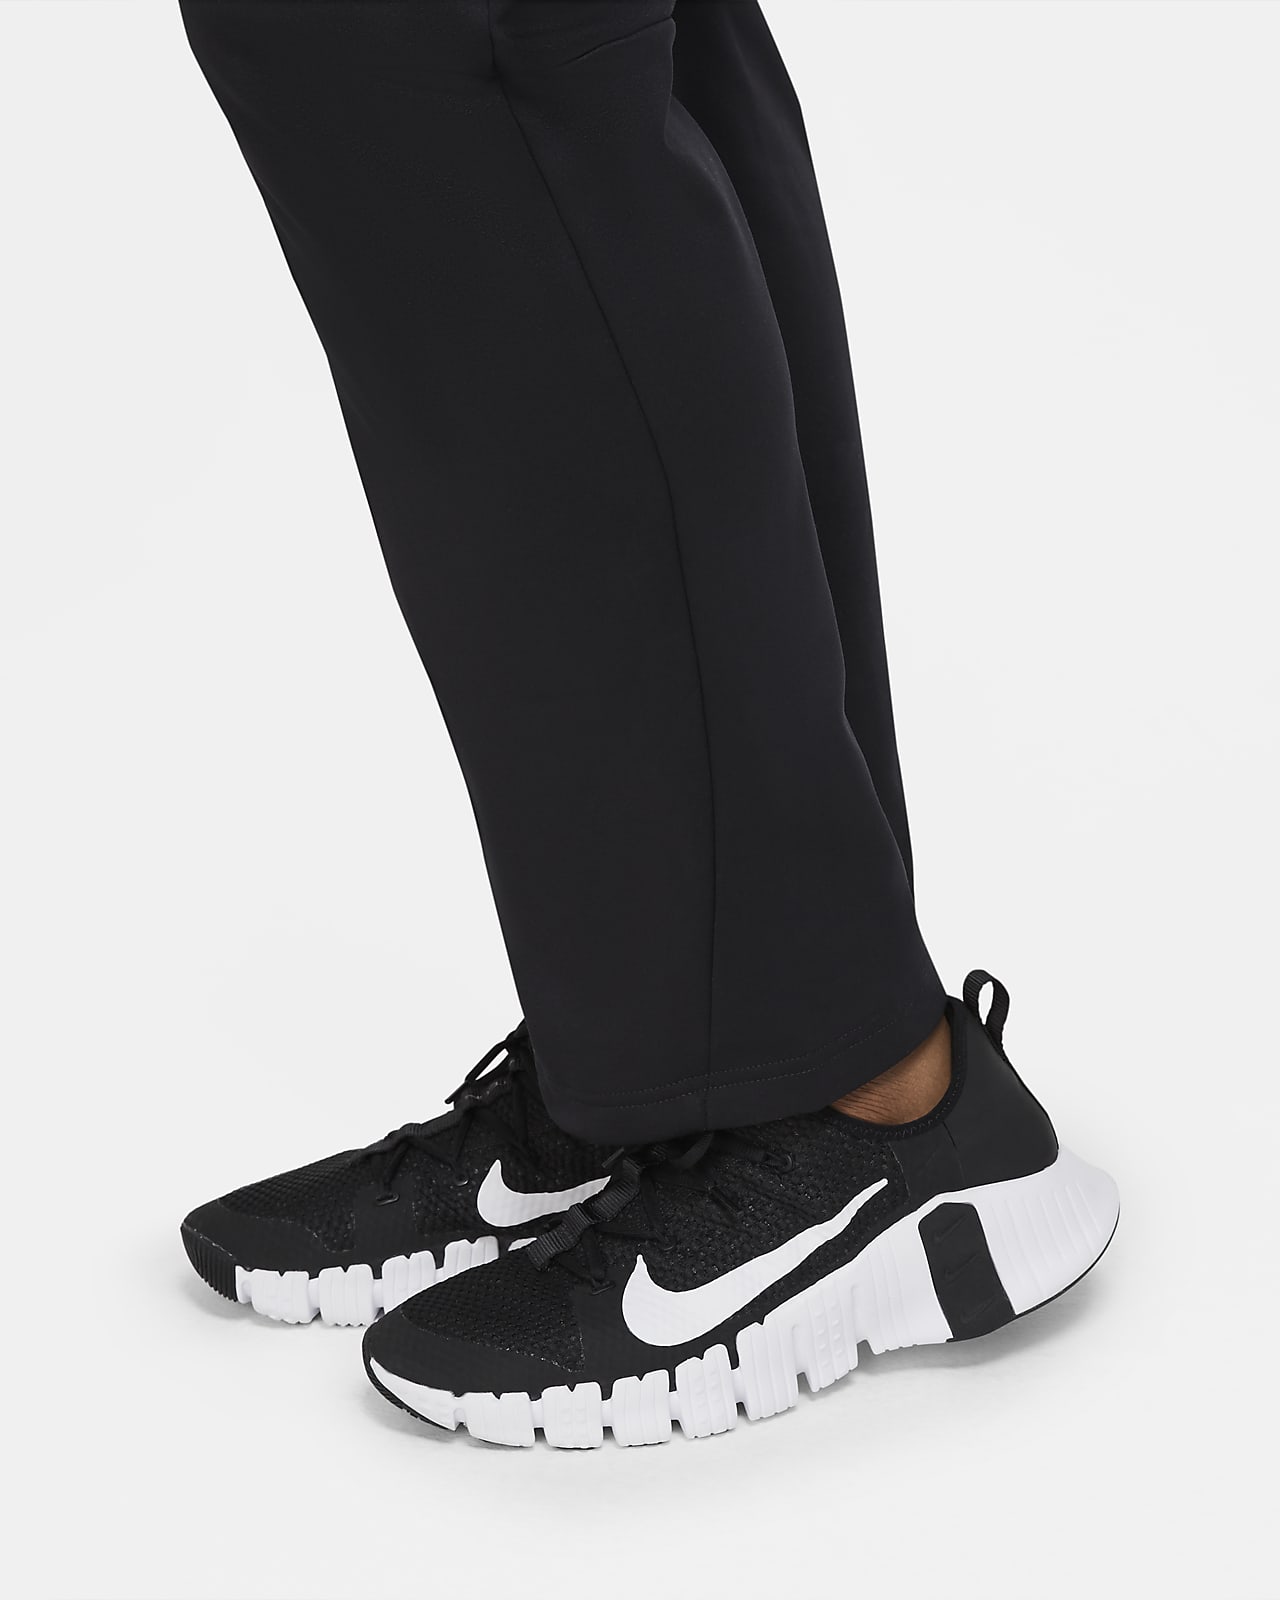 Nike Dry Tapered Training Pants Men - black/white CZ6379-010 | BIKE24